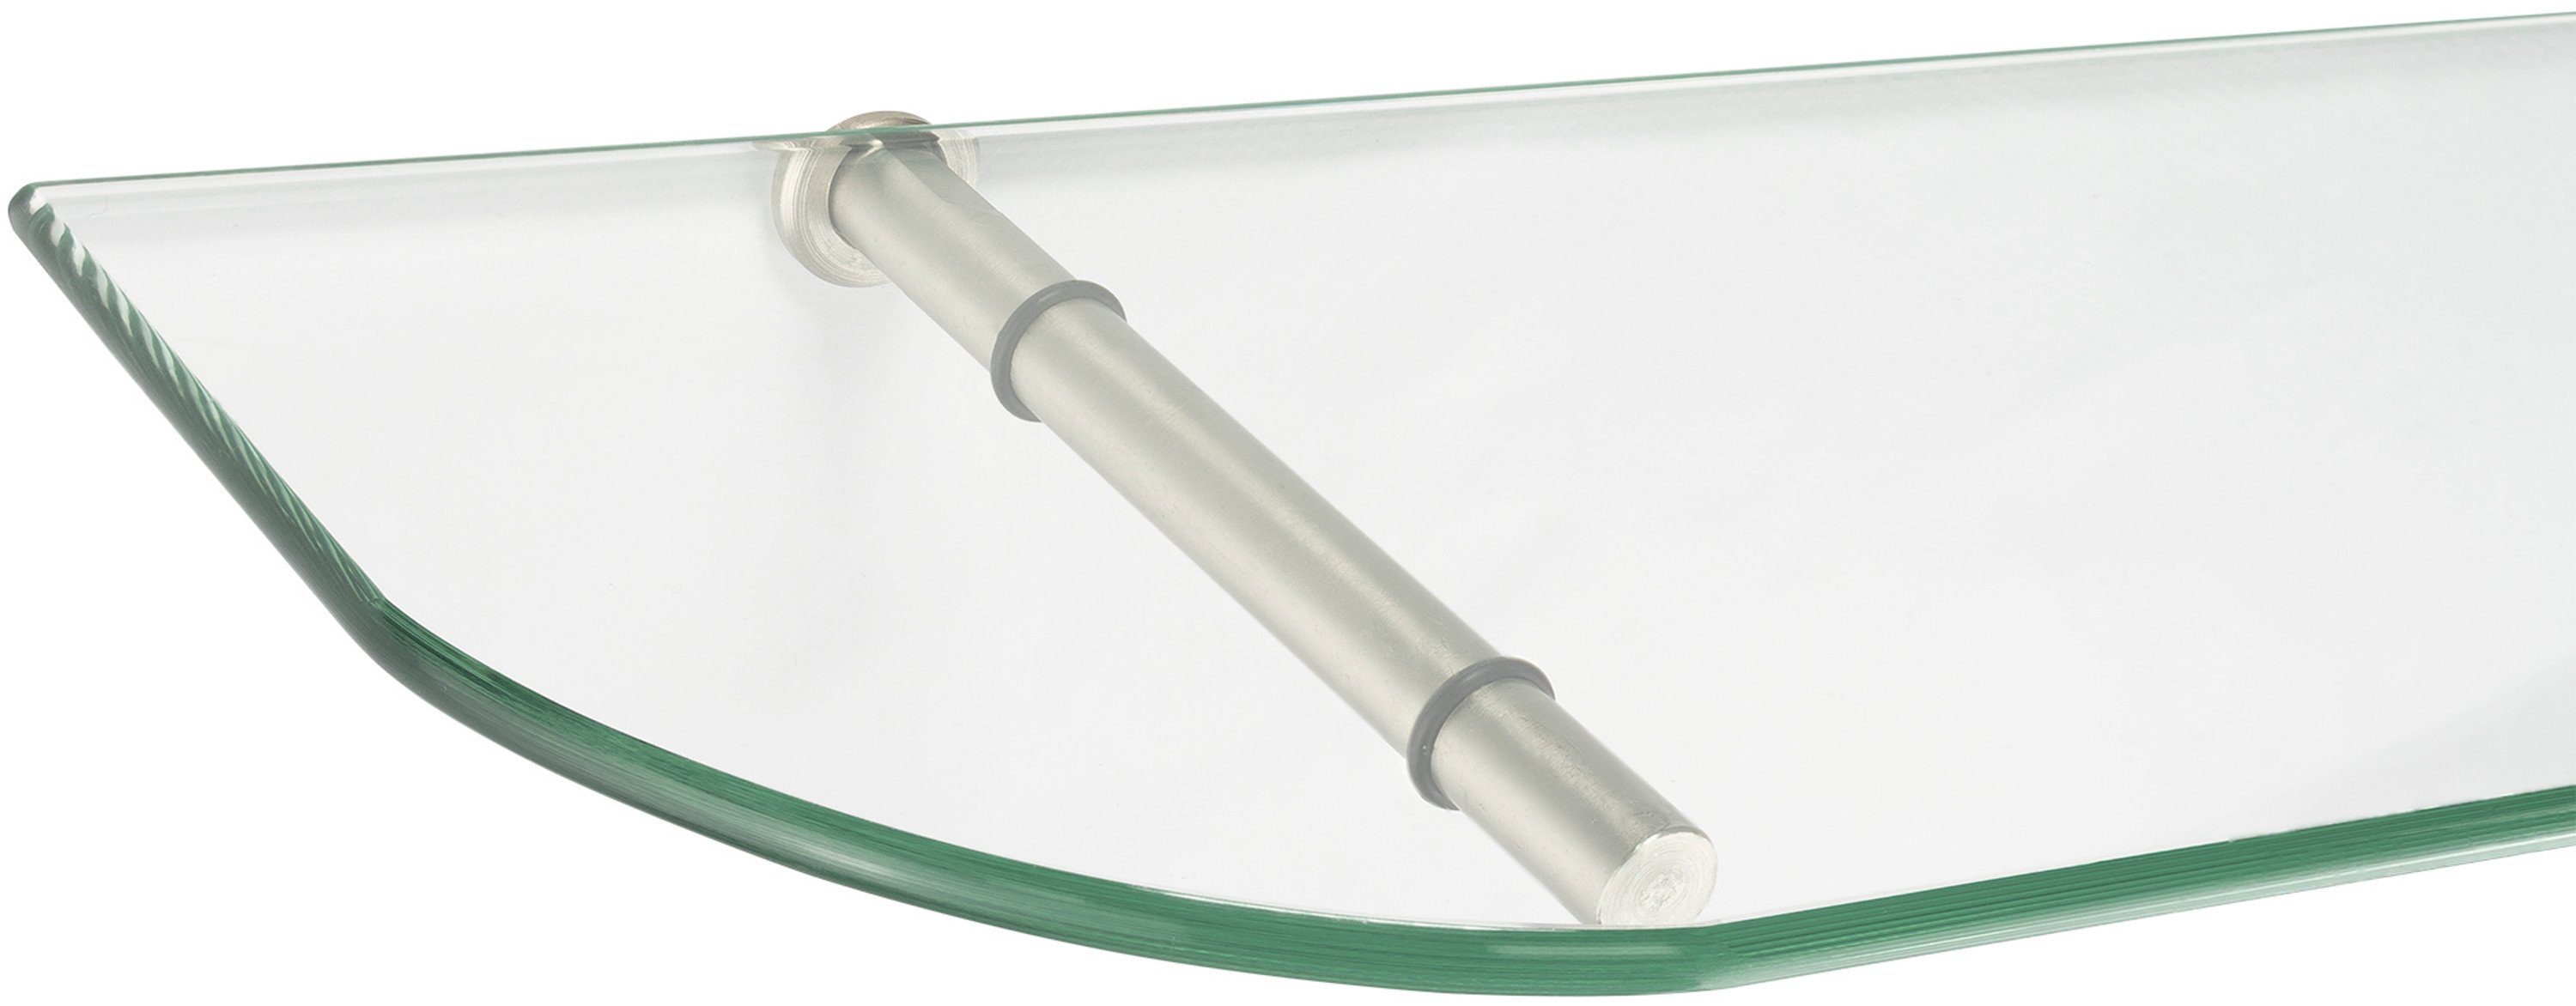 ib style Wandregal Glasregal 6mm klar 60 x 15 cm + STICK, Glasboden aus ESG-Sicherheitsglas - Wandregal